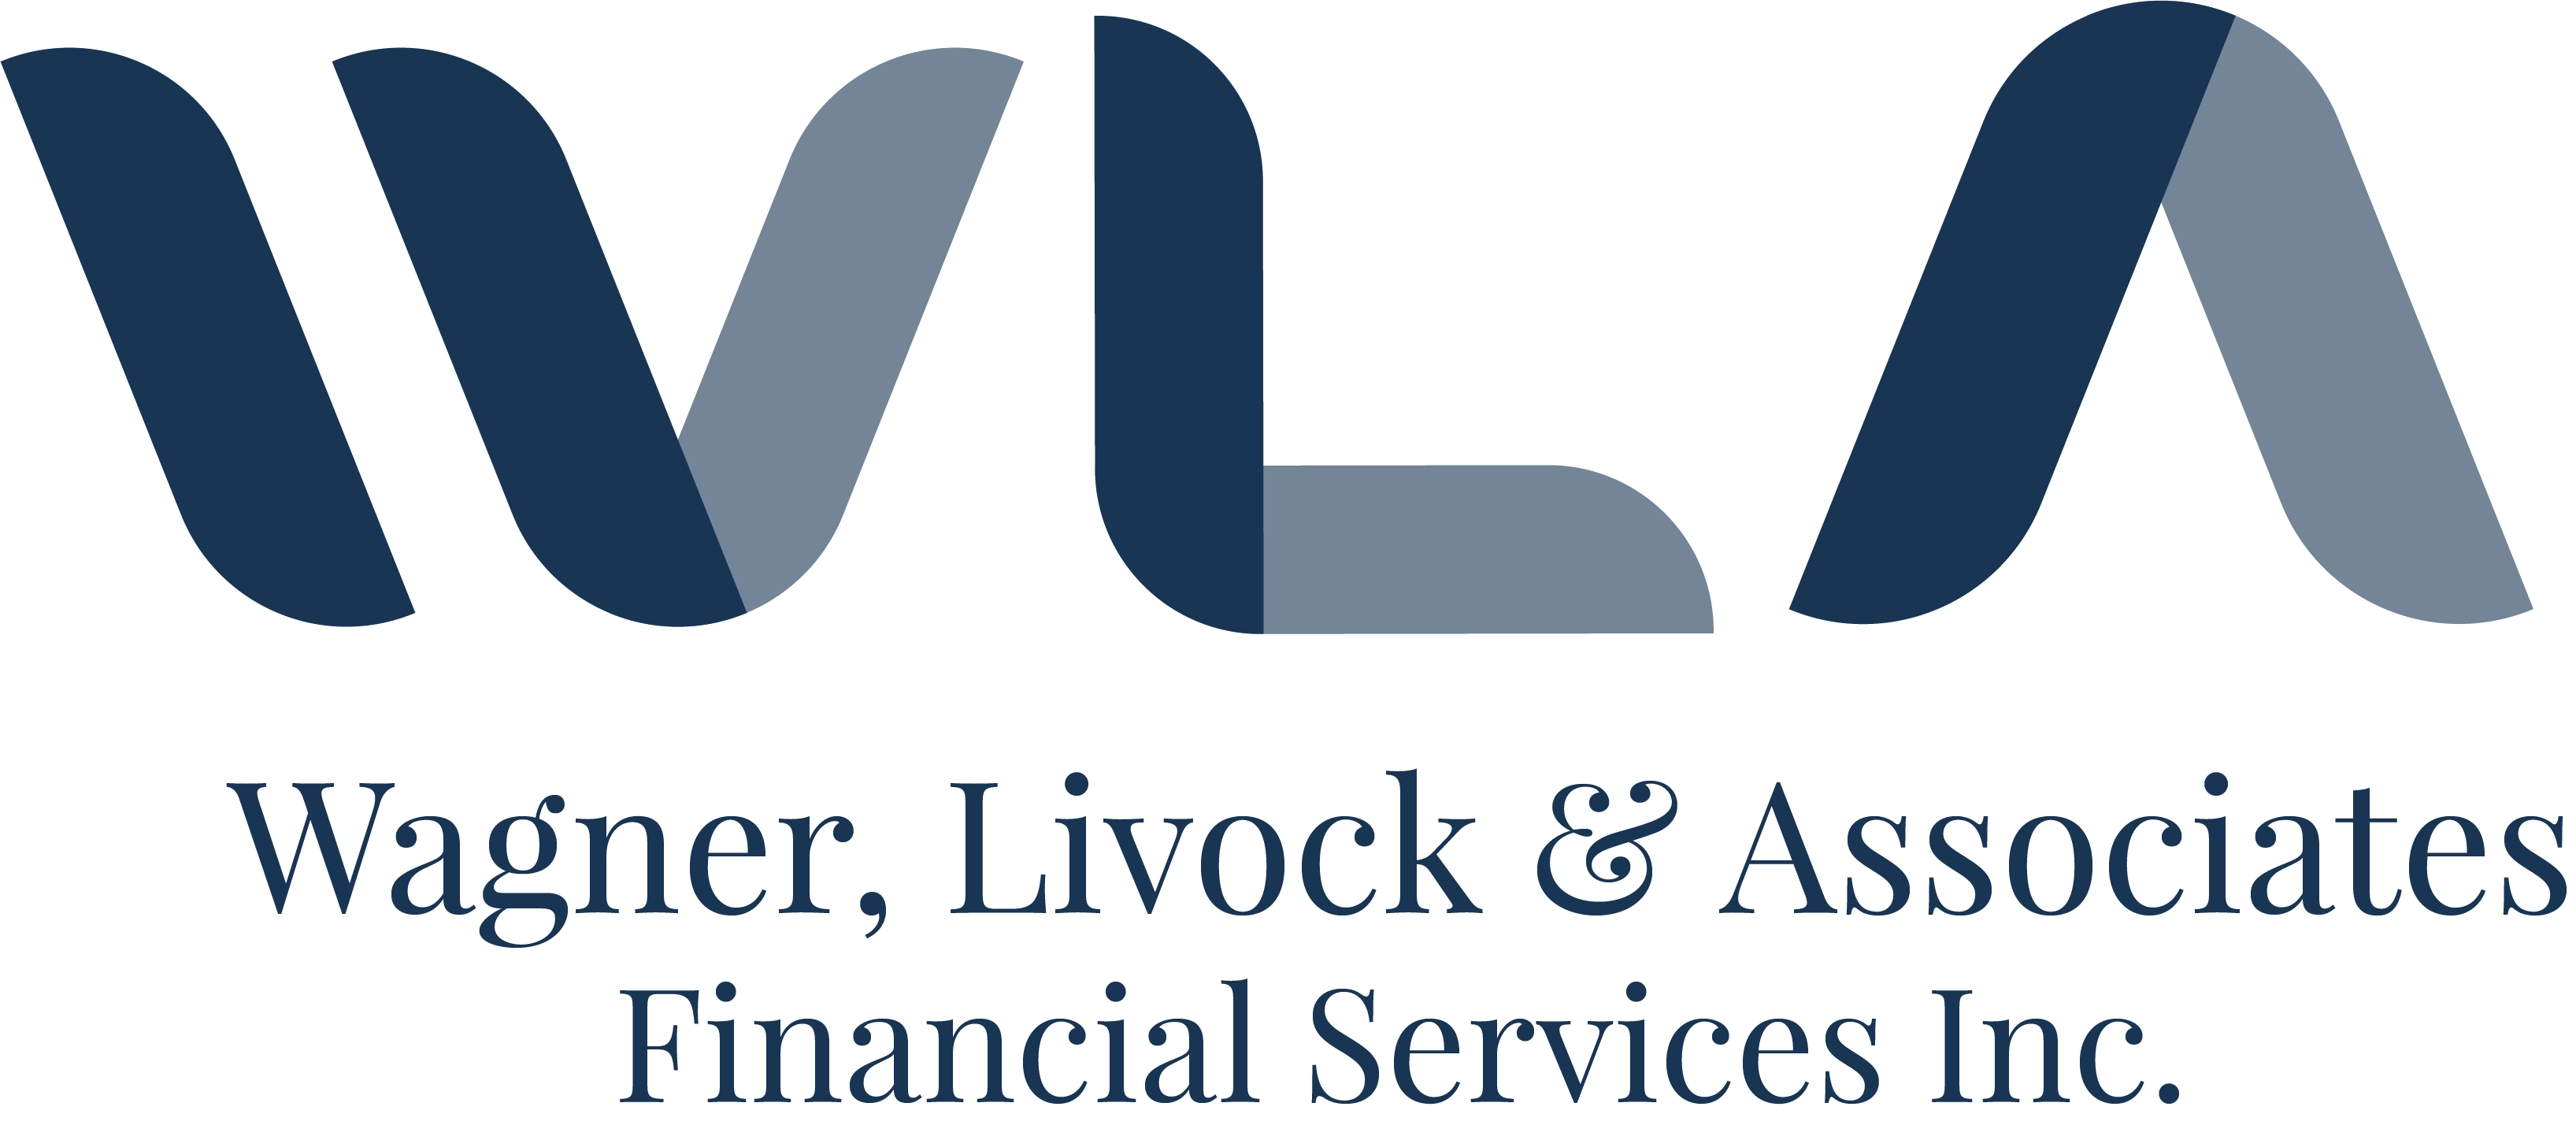 Wagner Livock & Associates 